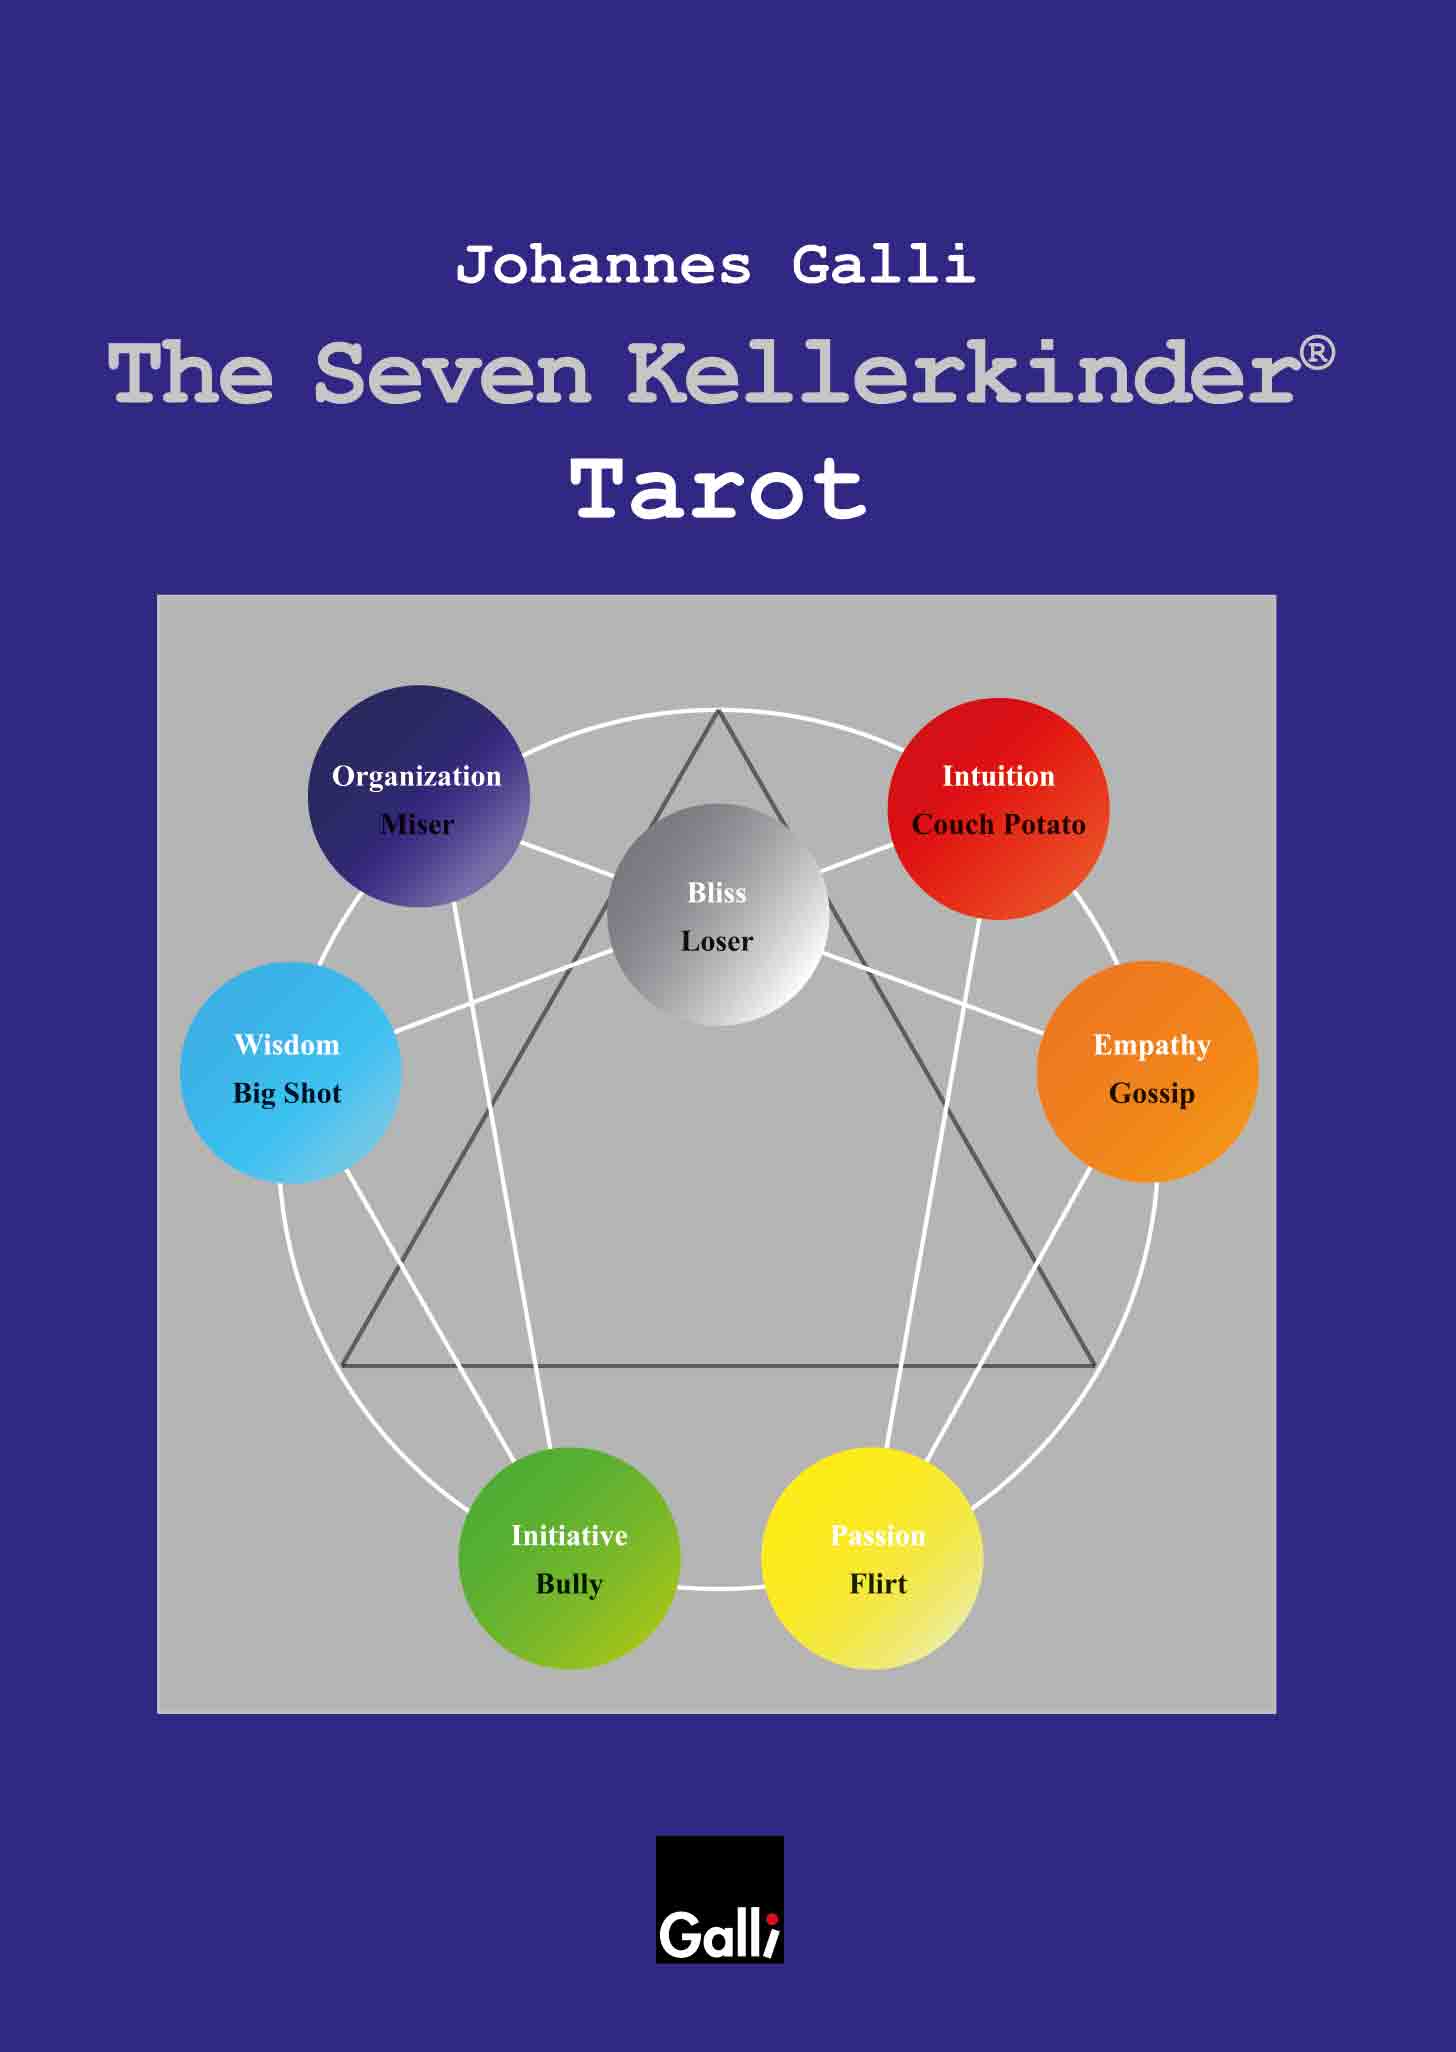 The Seven Kellerkinder® Tarot